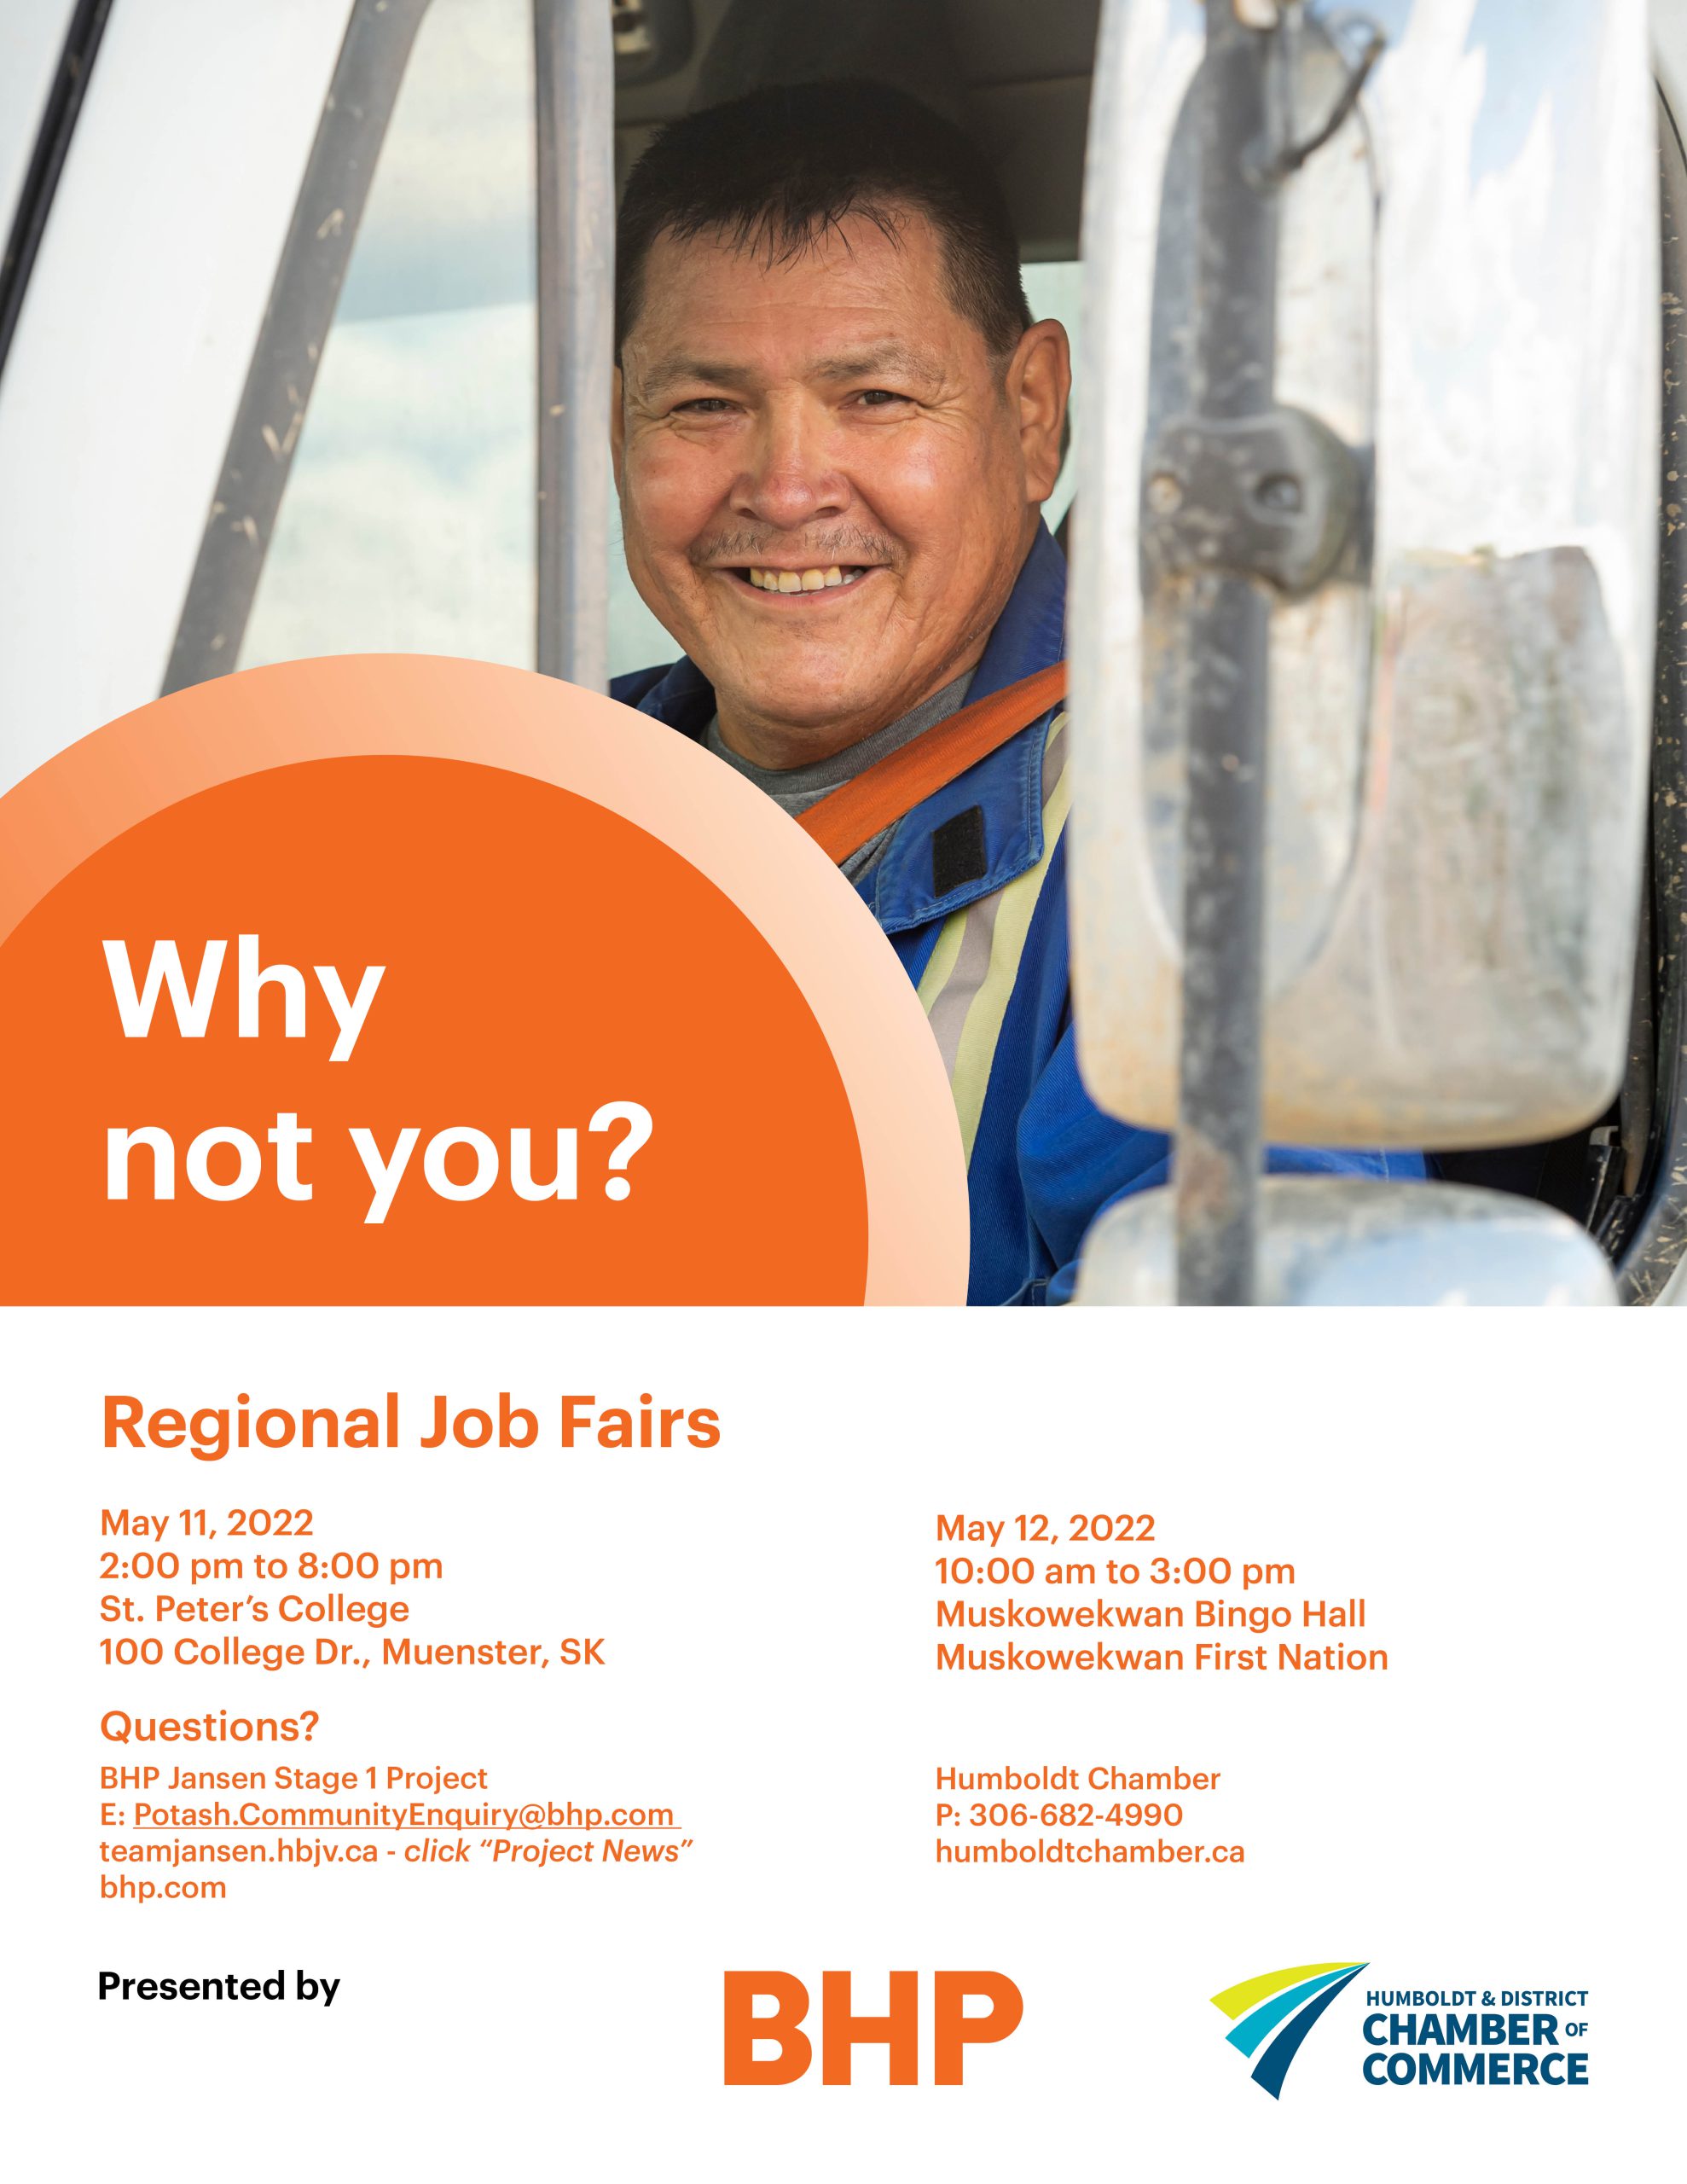 Regional Job Fairs